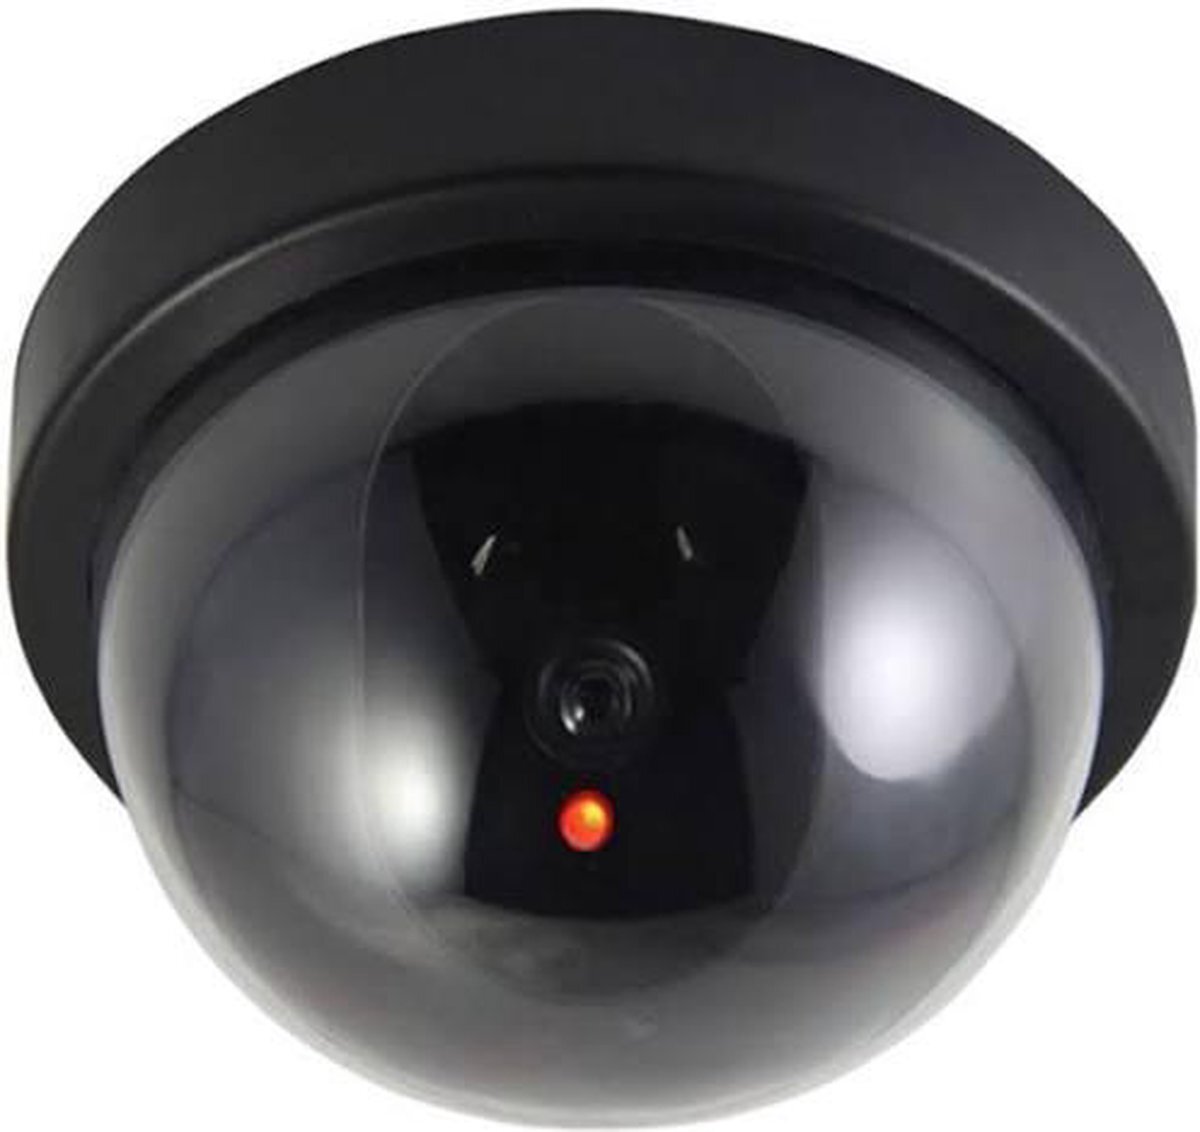 First Alarm Camera beveiliging | Beveiligingscamera | Binnen & Buiten | Dummy camera | LED verlichting zwart